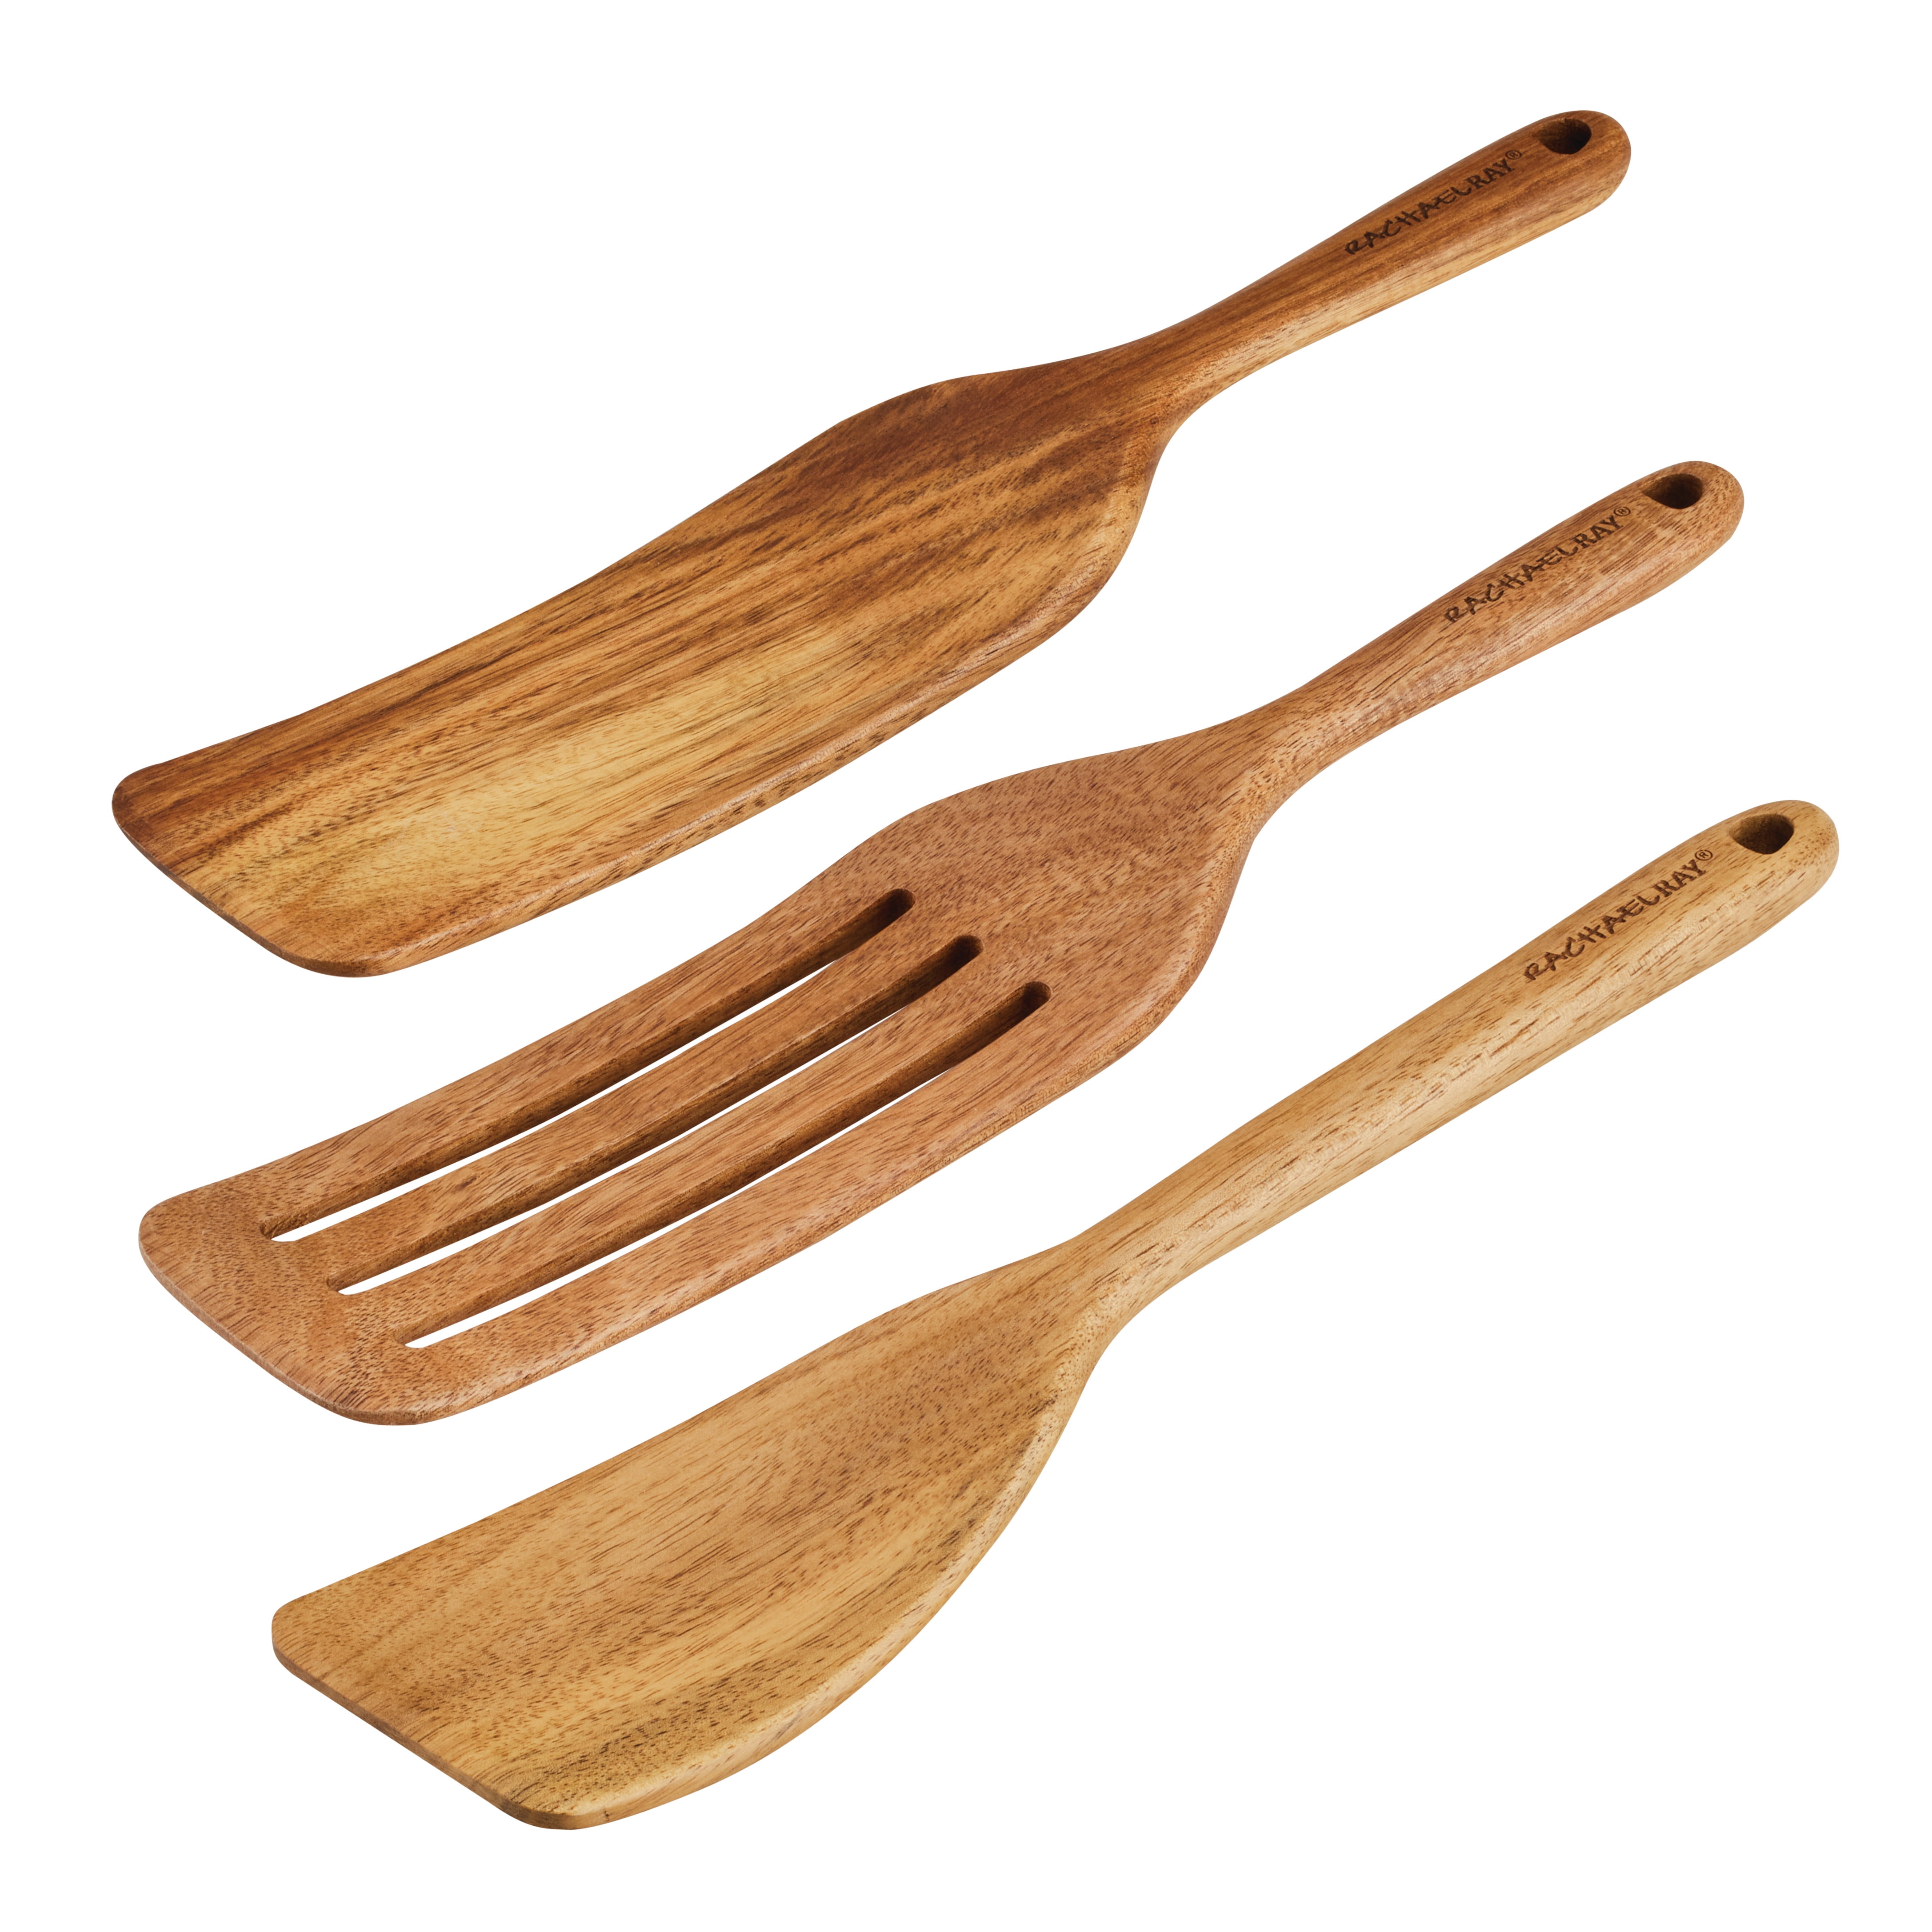 Furi Rachael Ray Essential 3-Piece Bamboo Cutlery Set 